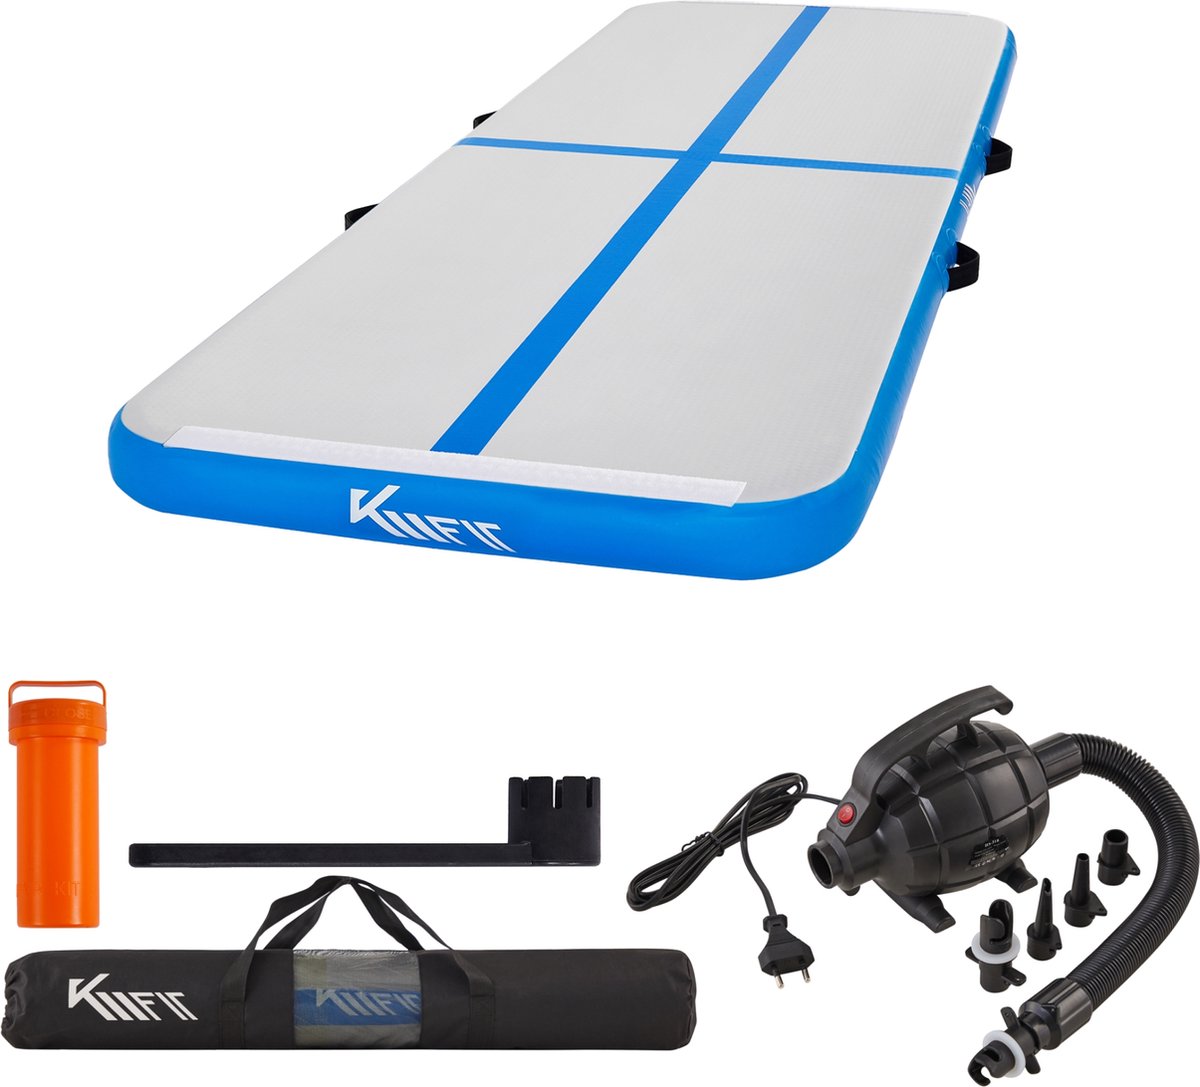 KM-Fit Airtrack - Turnmat - 3 m - Gymnastiekmat Opvouwbaar - Incl. elektrische pomp & patch kit - Mintgroen